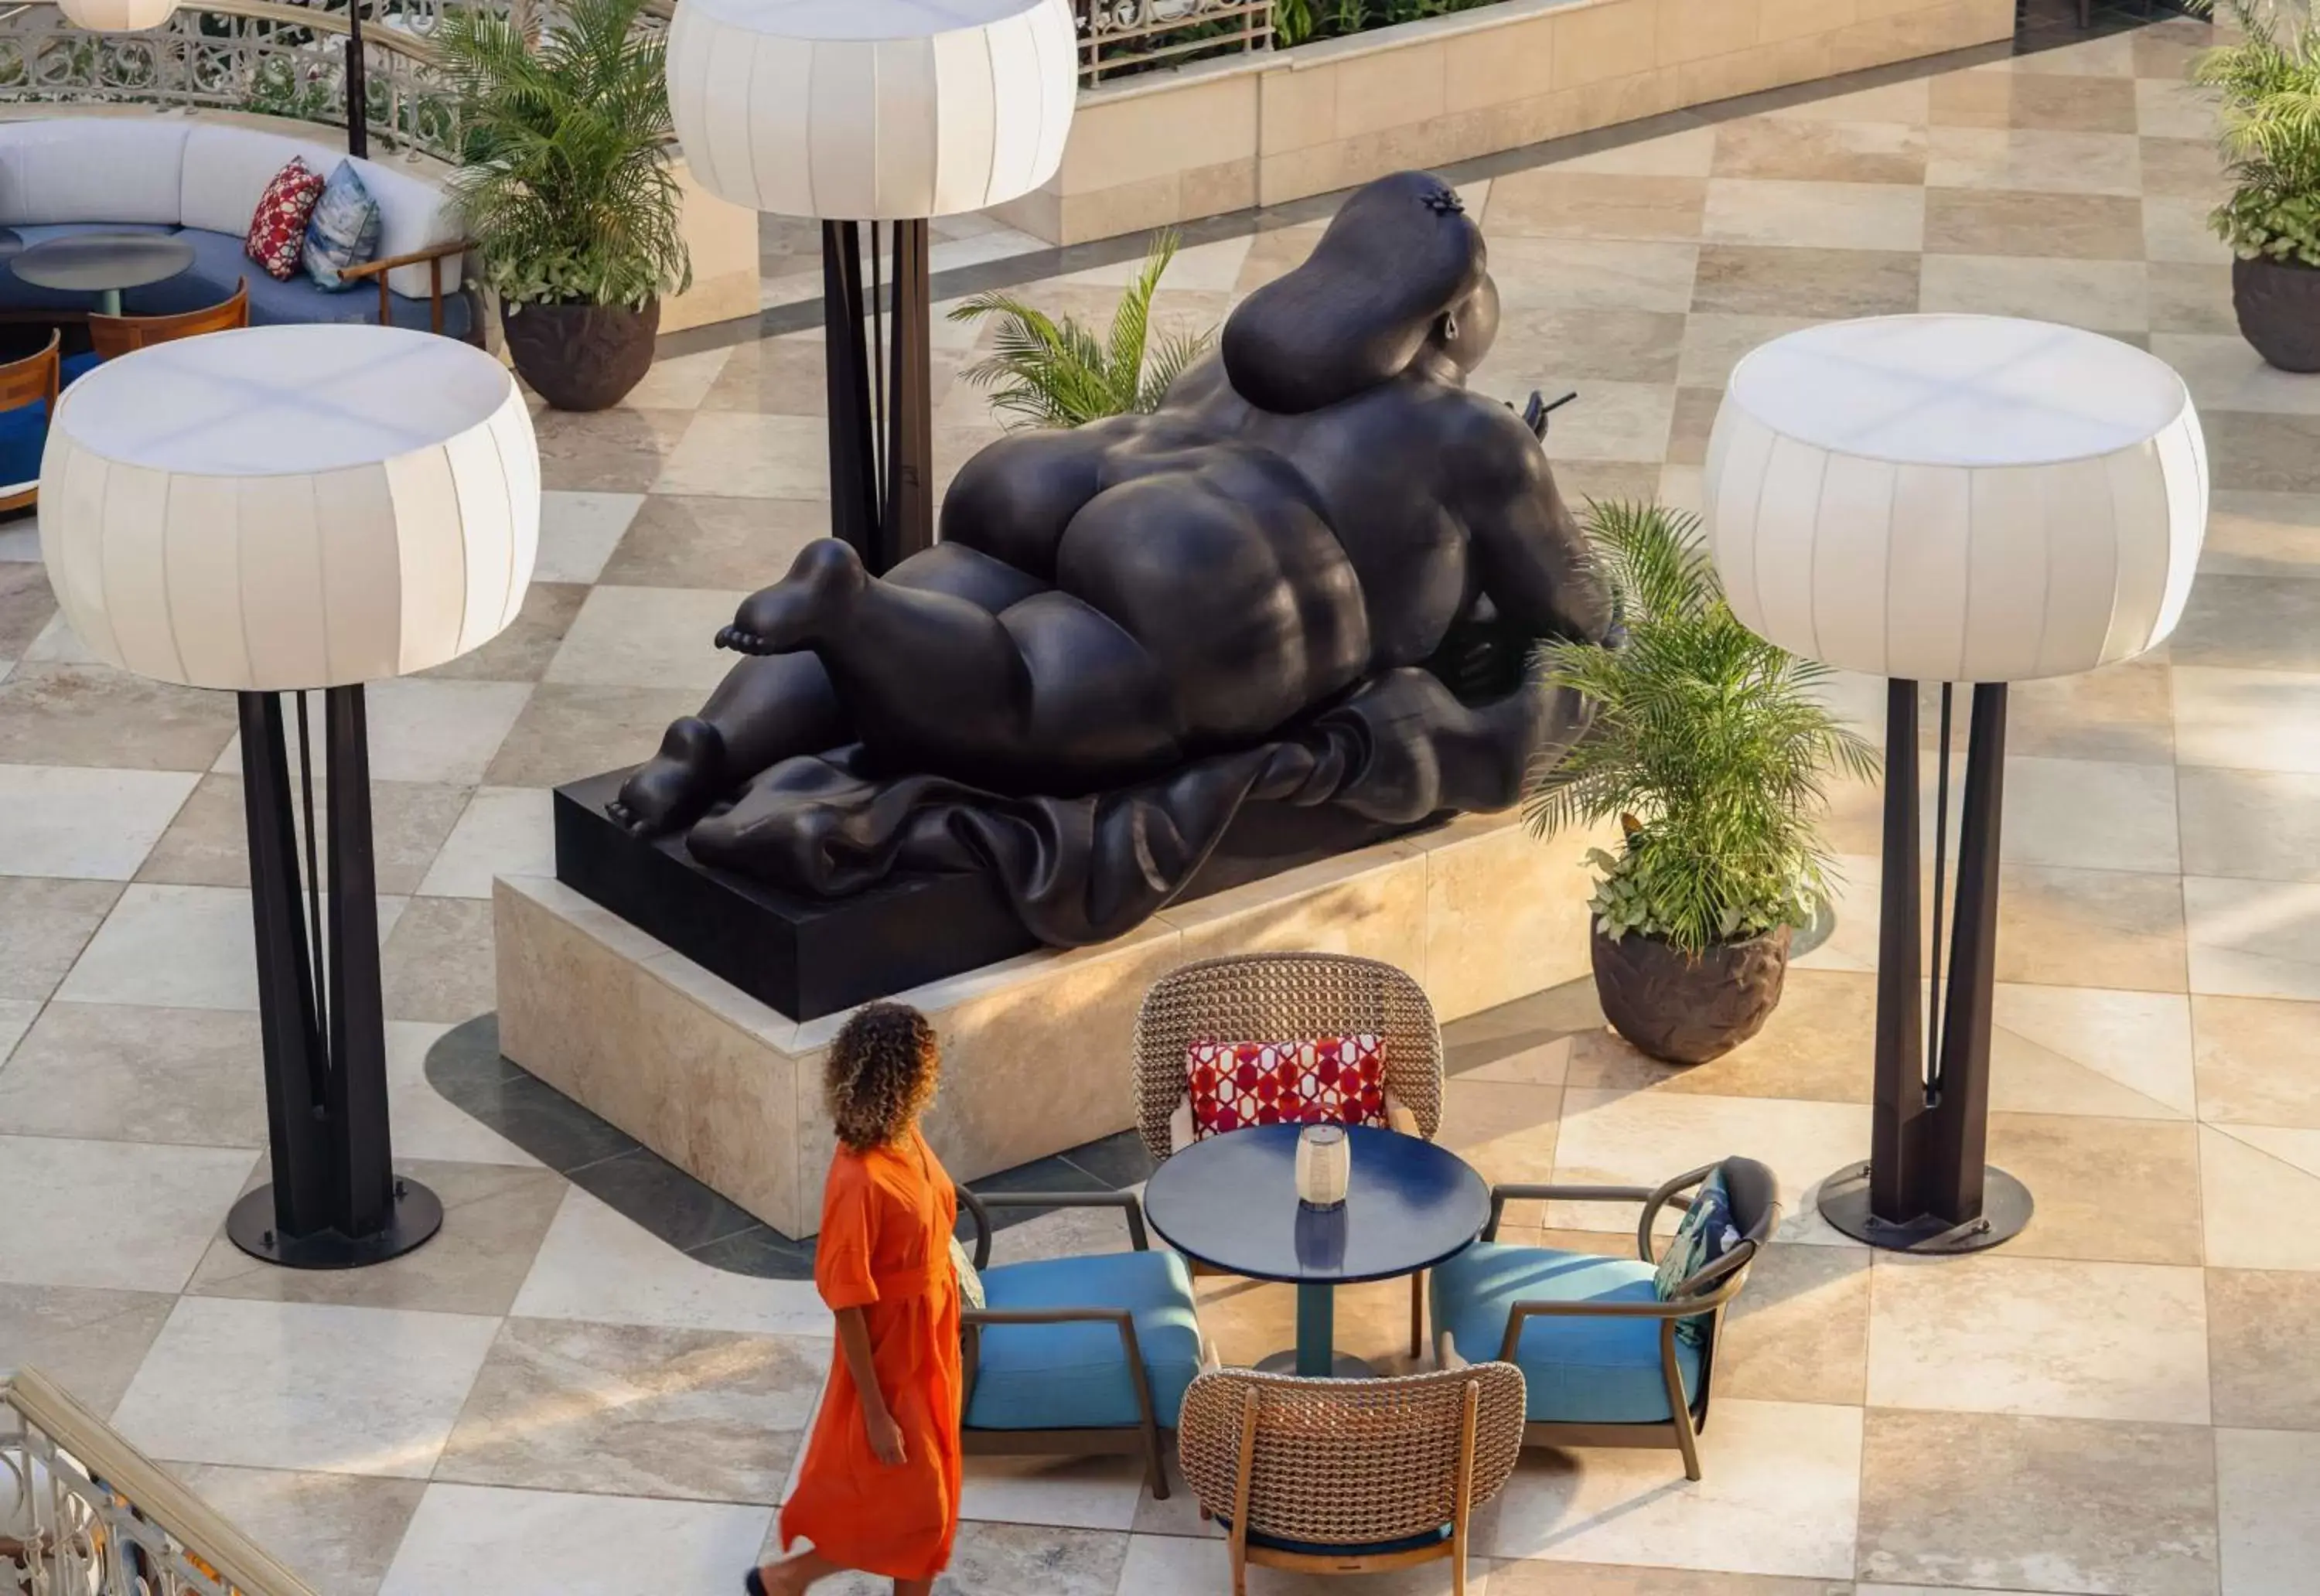 Lobby or reception in Grand Wailea Resort Hotel & Spa, A Waldorf Astoria Resort